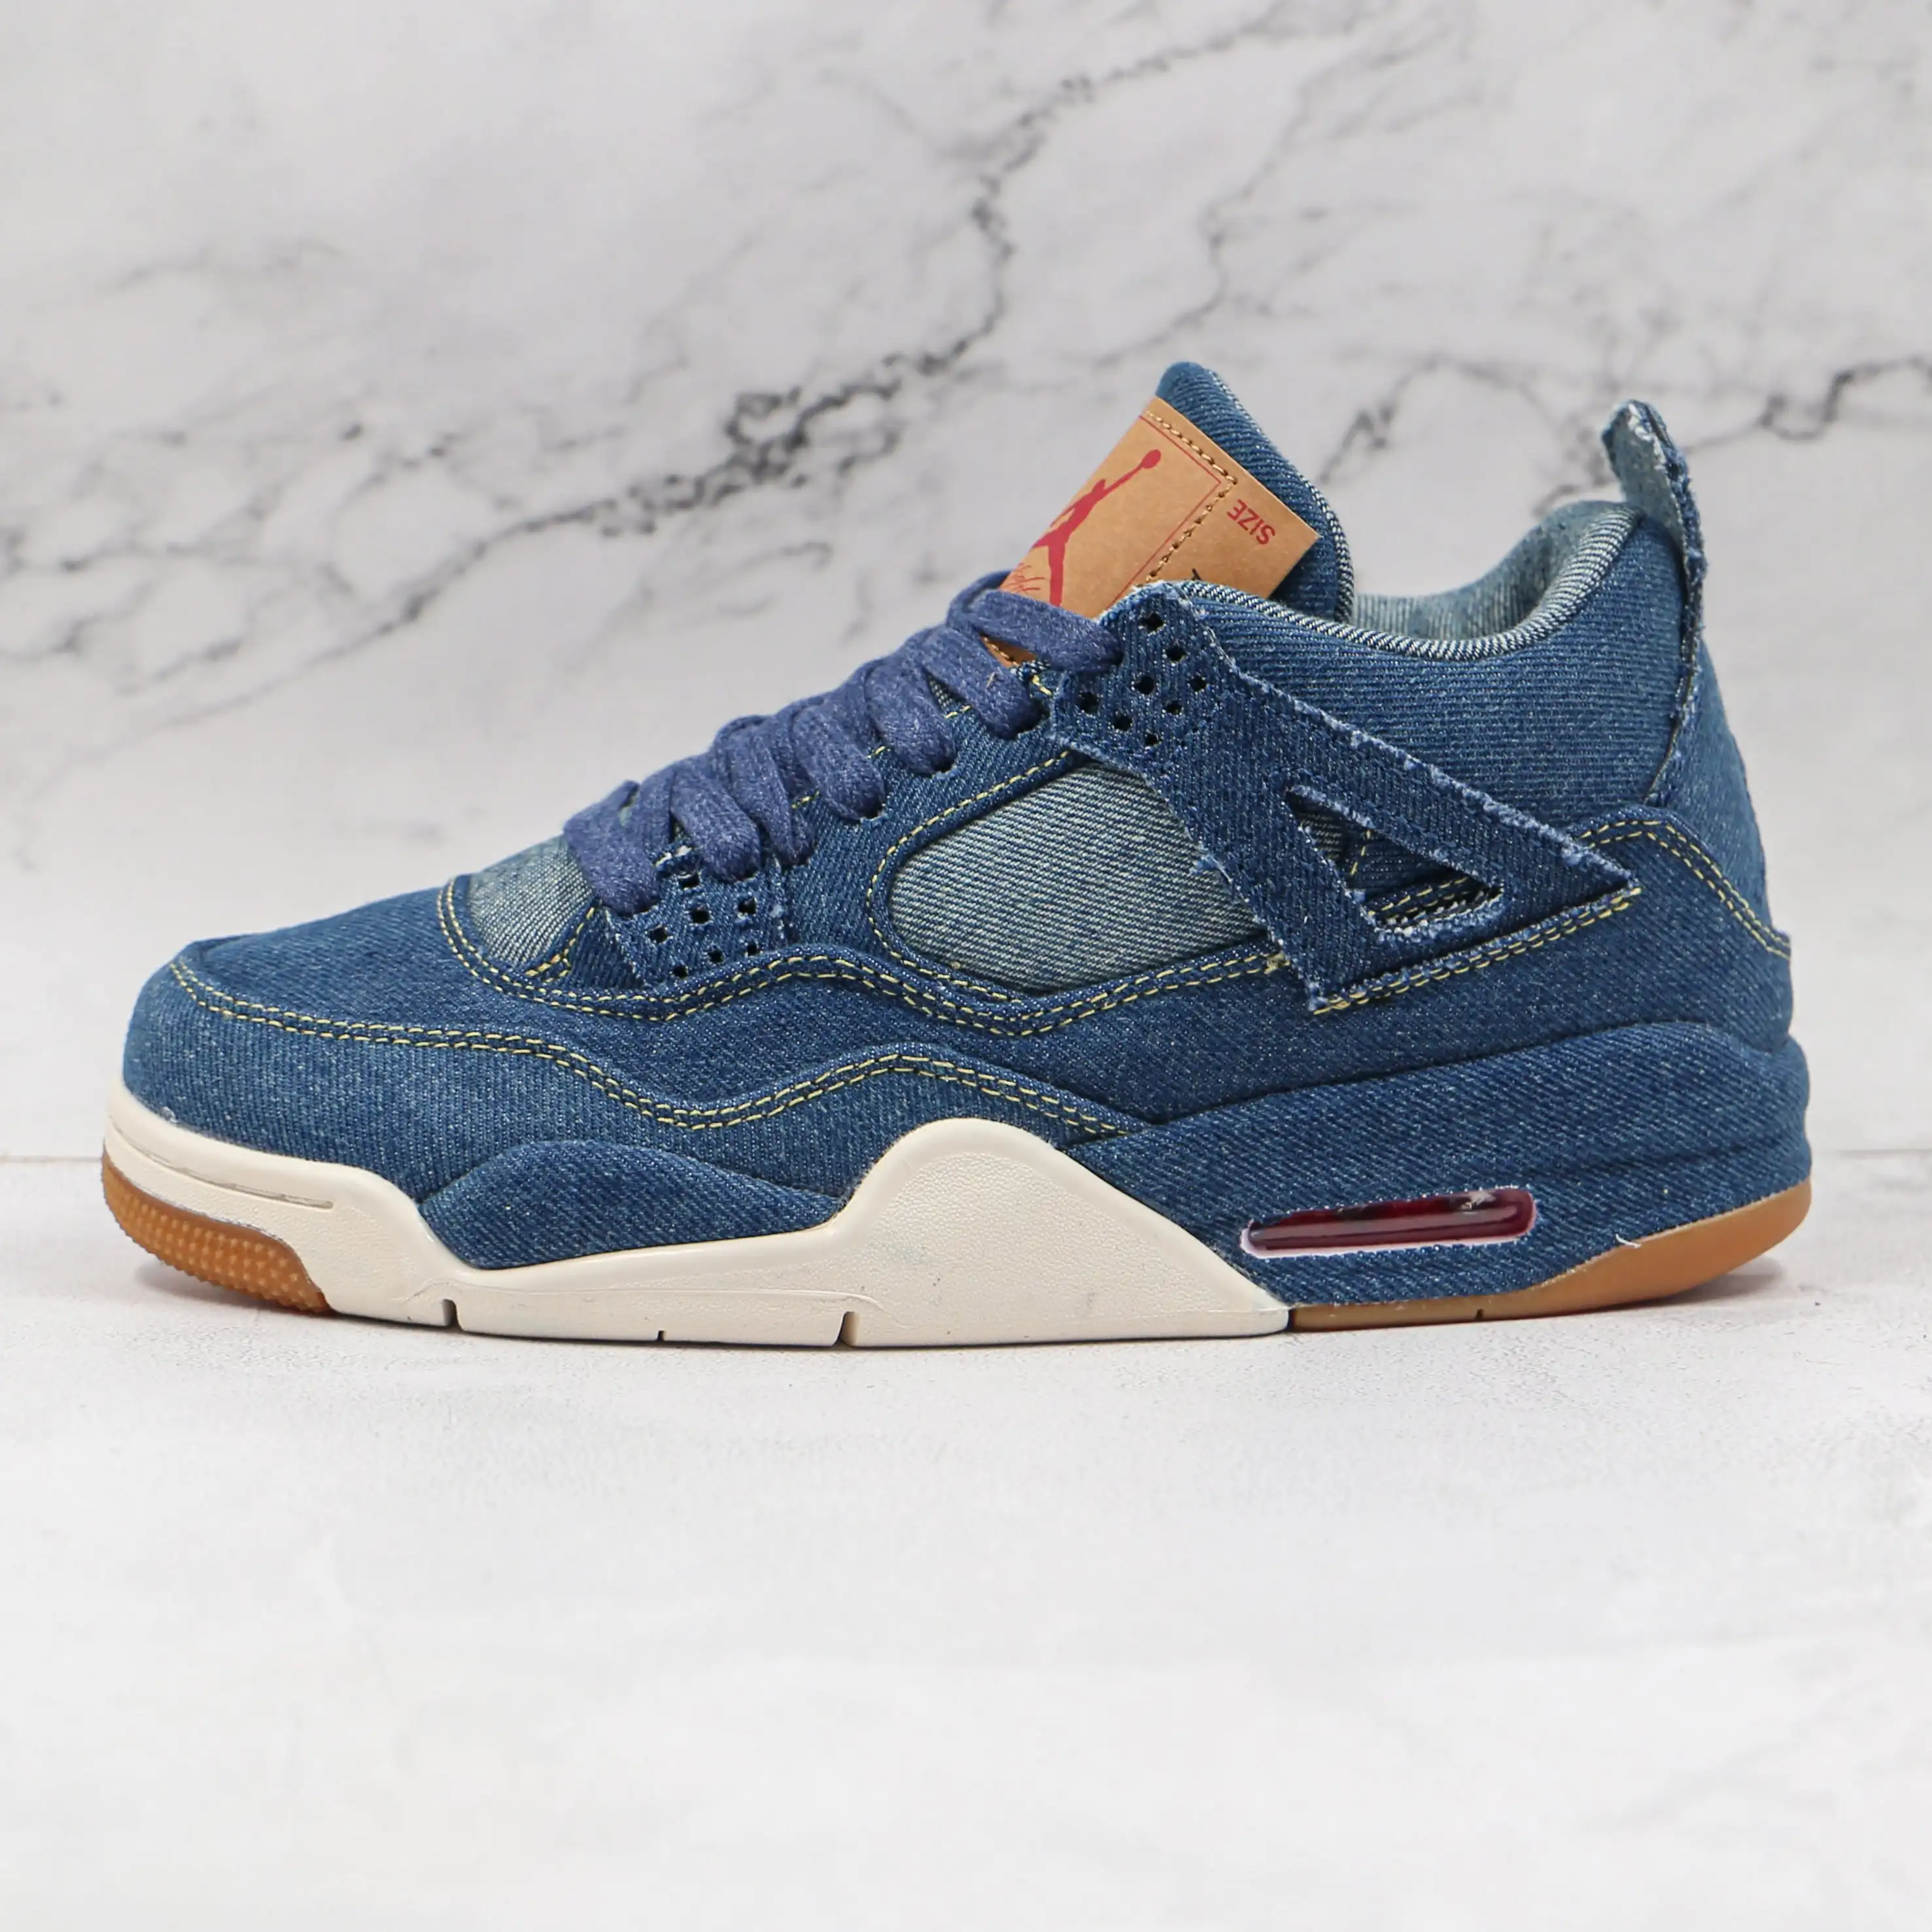 

High Quality Casual Denim Blue AJ4 Nike Air Jordan 4 Retro Zapatillas Men Sneaker Shoes